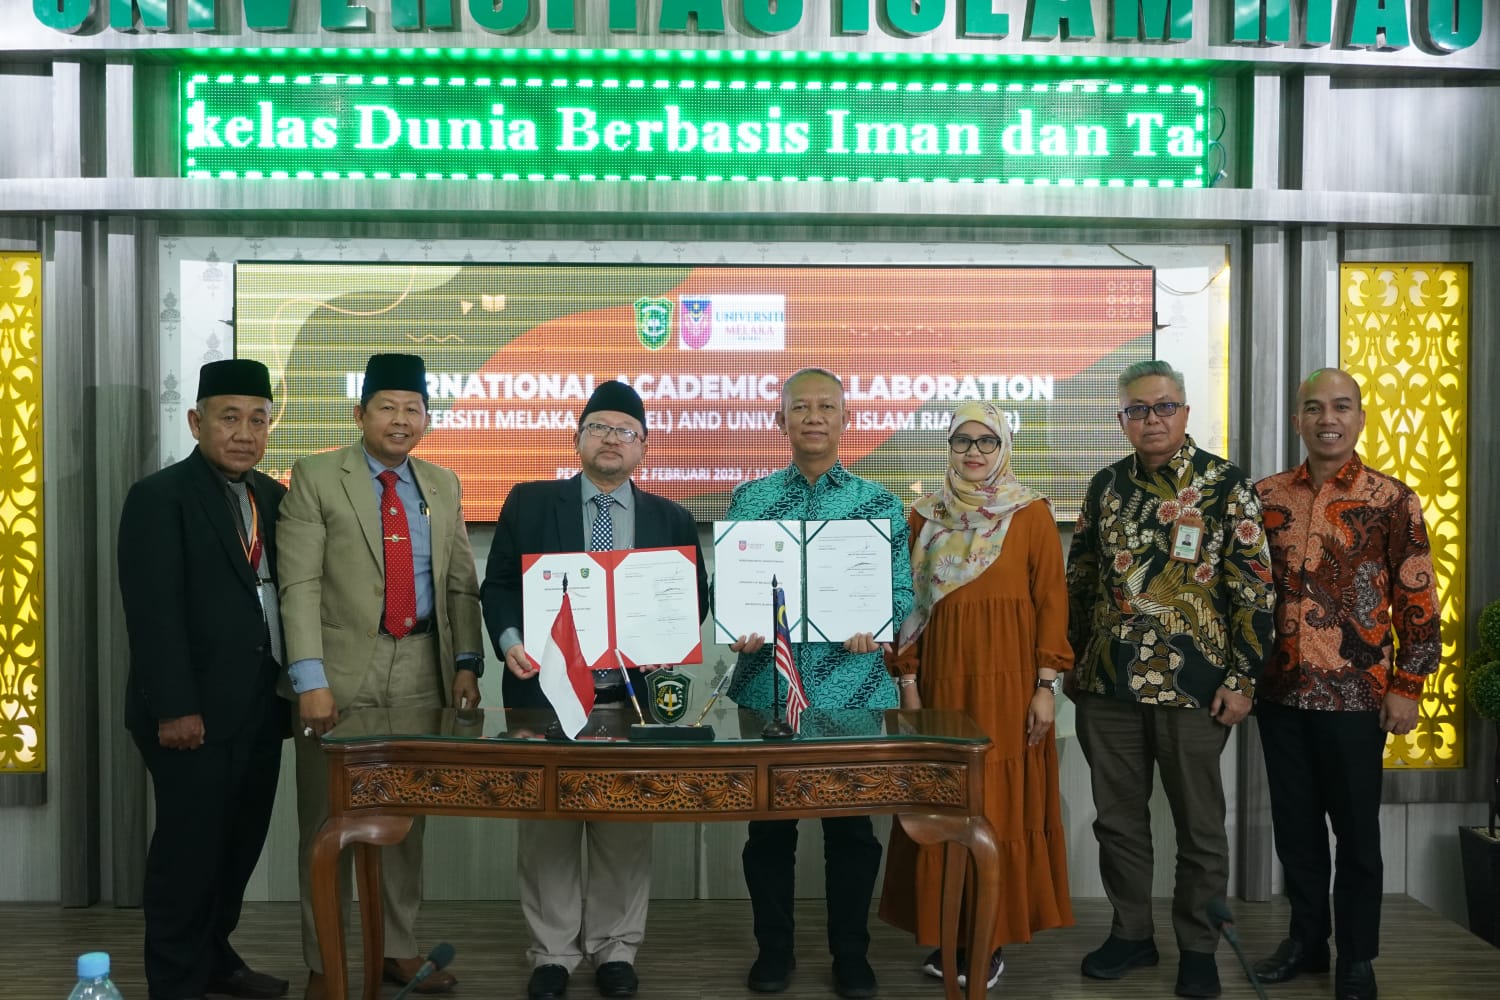 UIR dan Universiti Melaka Sepakat Kerjasama International Academic Collaboration